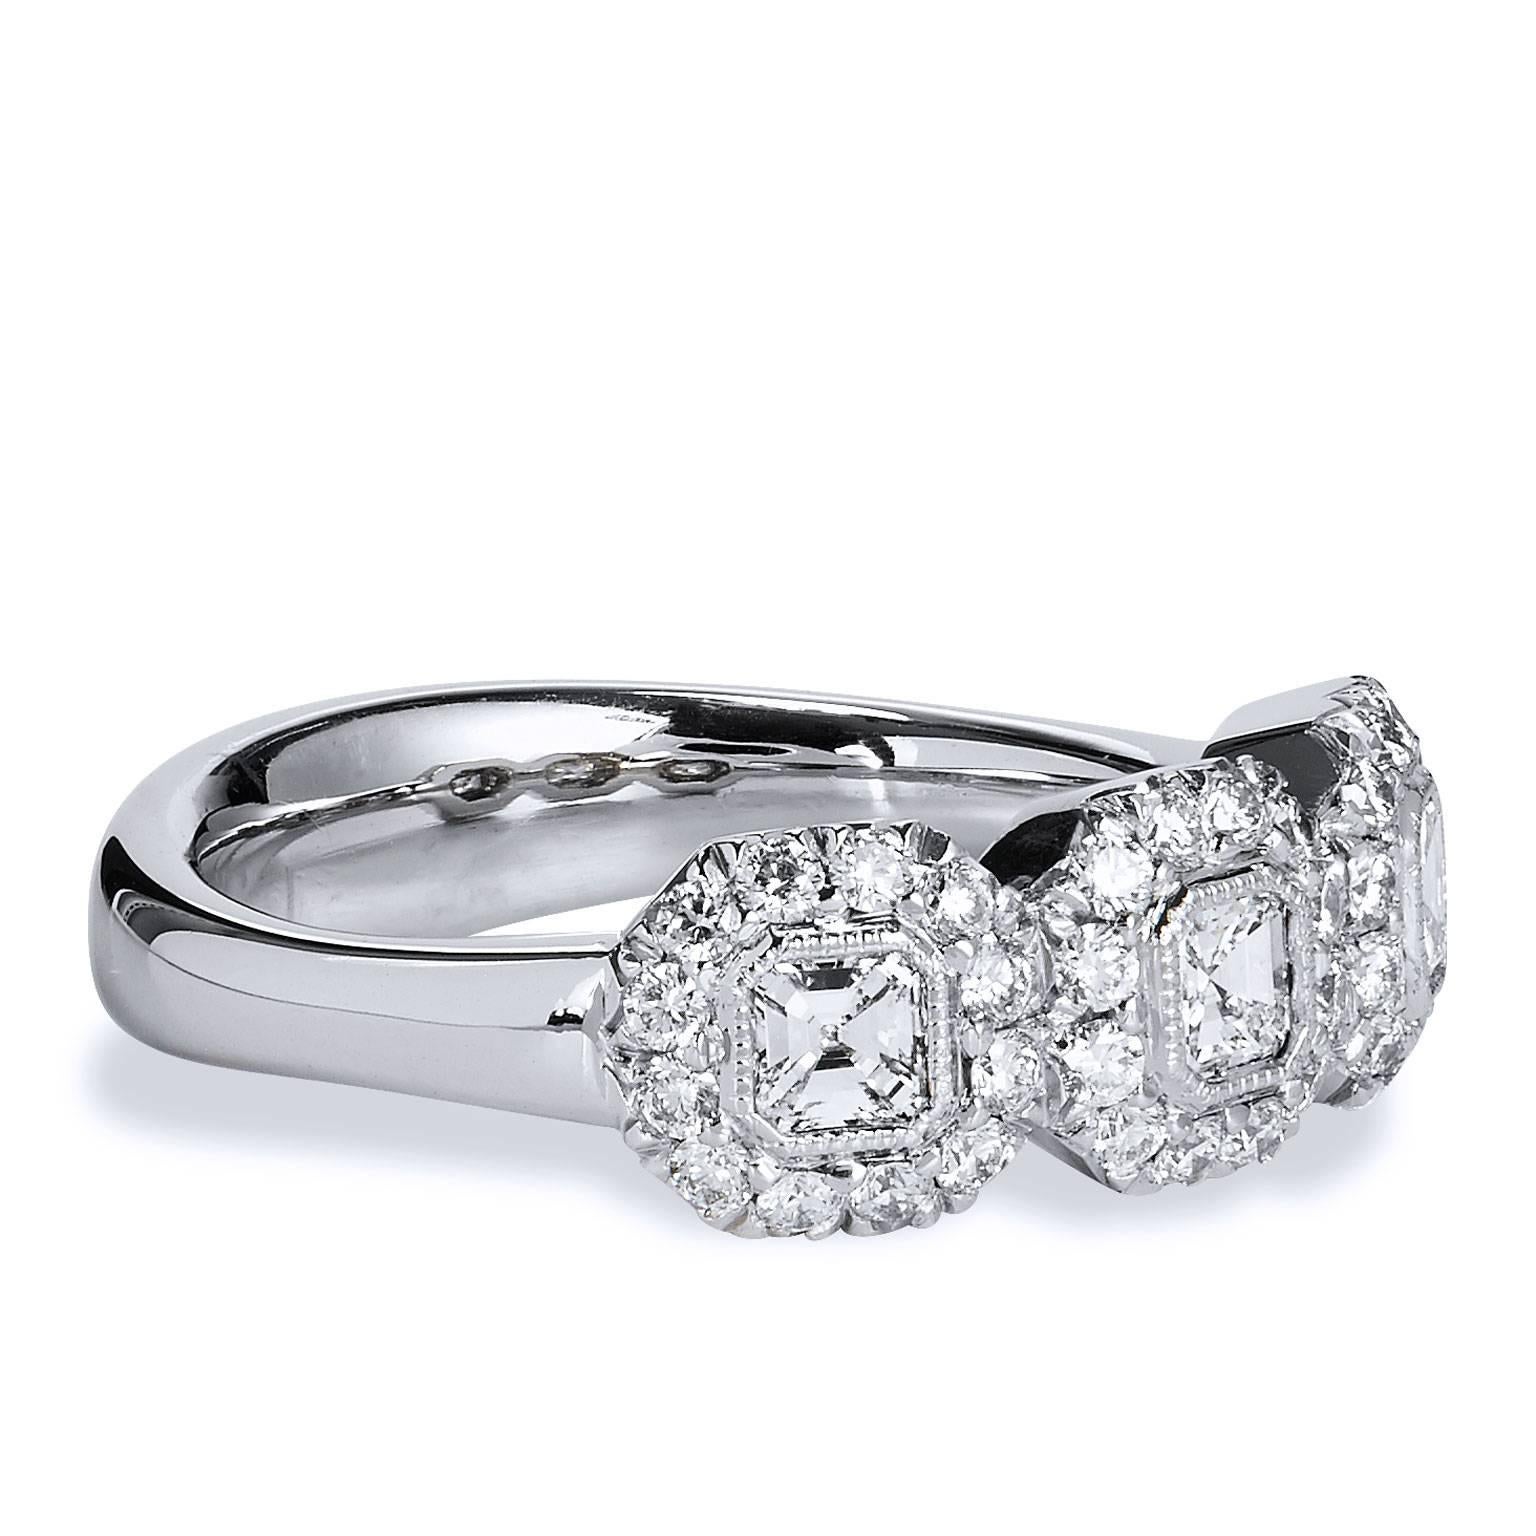 Emerald Cut 3 Fine Diamonds Set in a Pave Diamond 18kt White Gold Ring